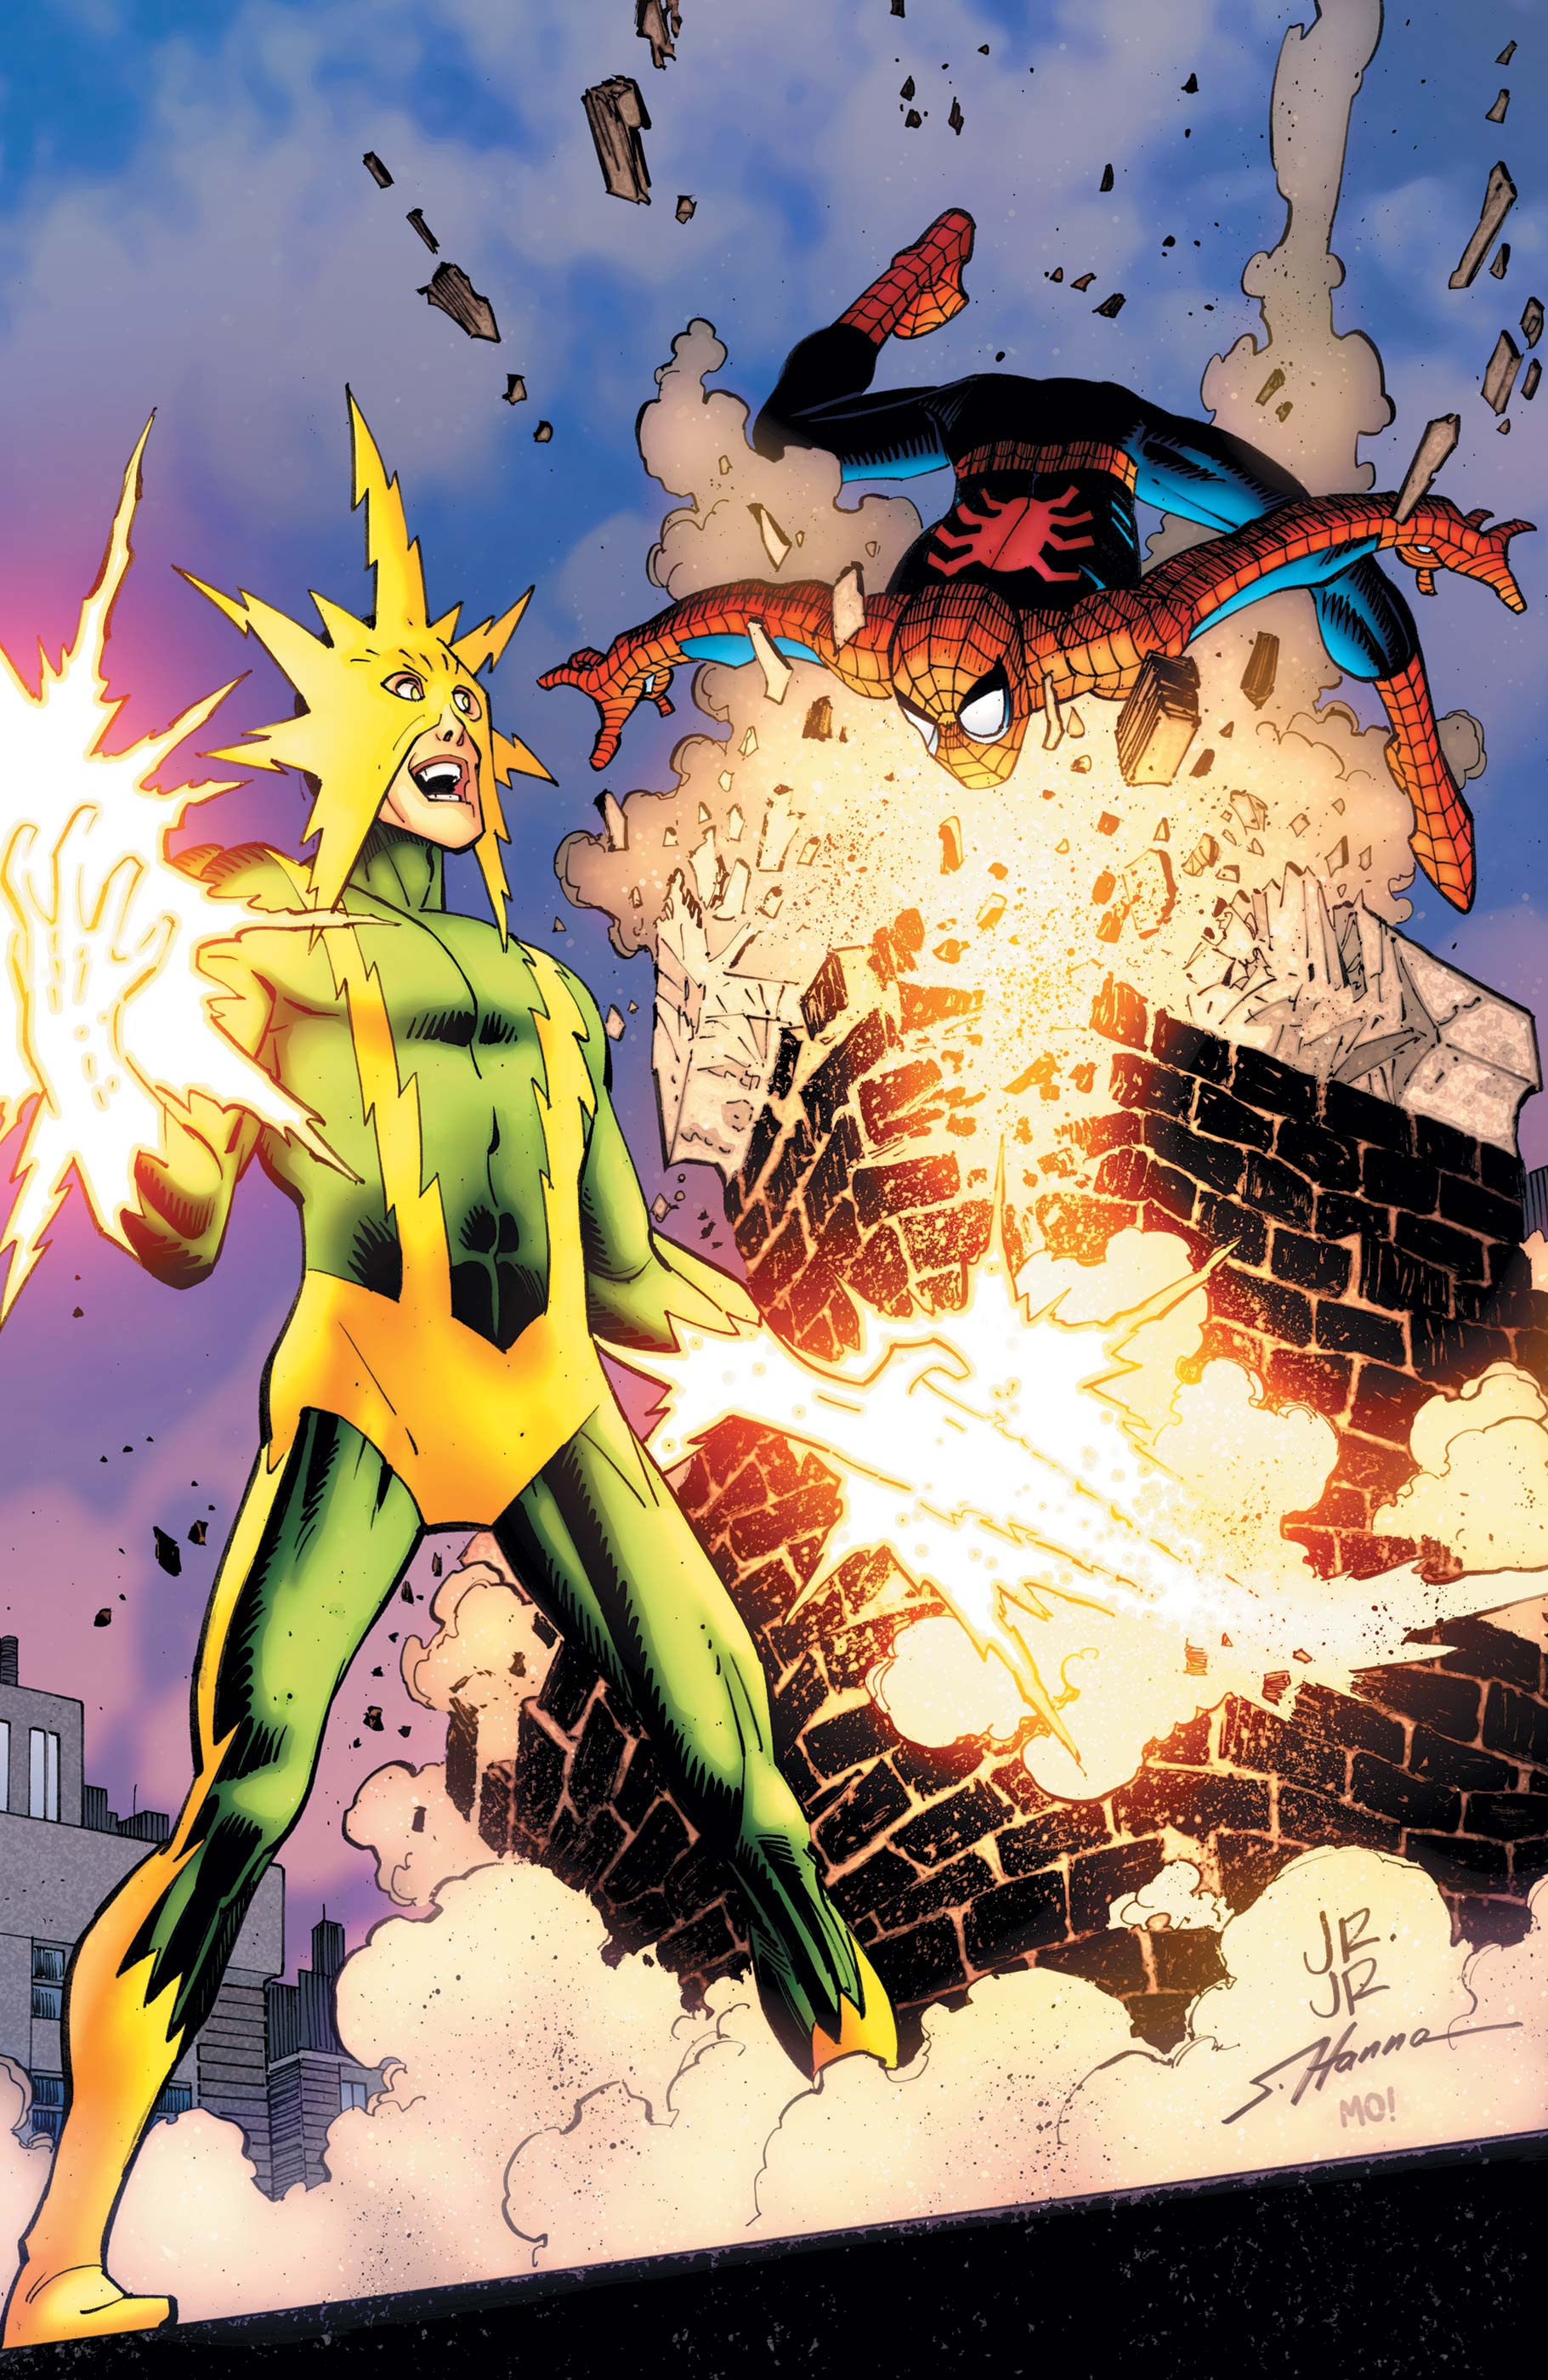 The Amazing Spider-Man (2022) #46 (Variant)